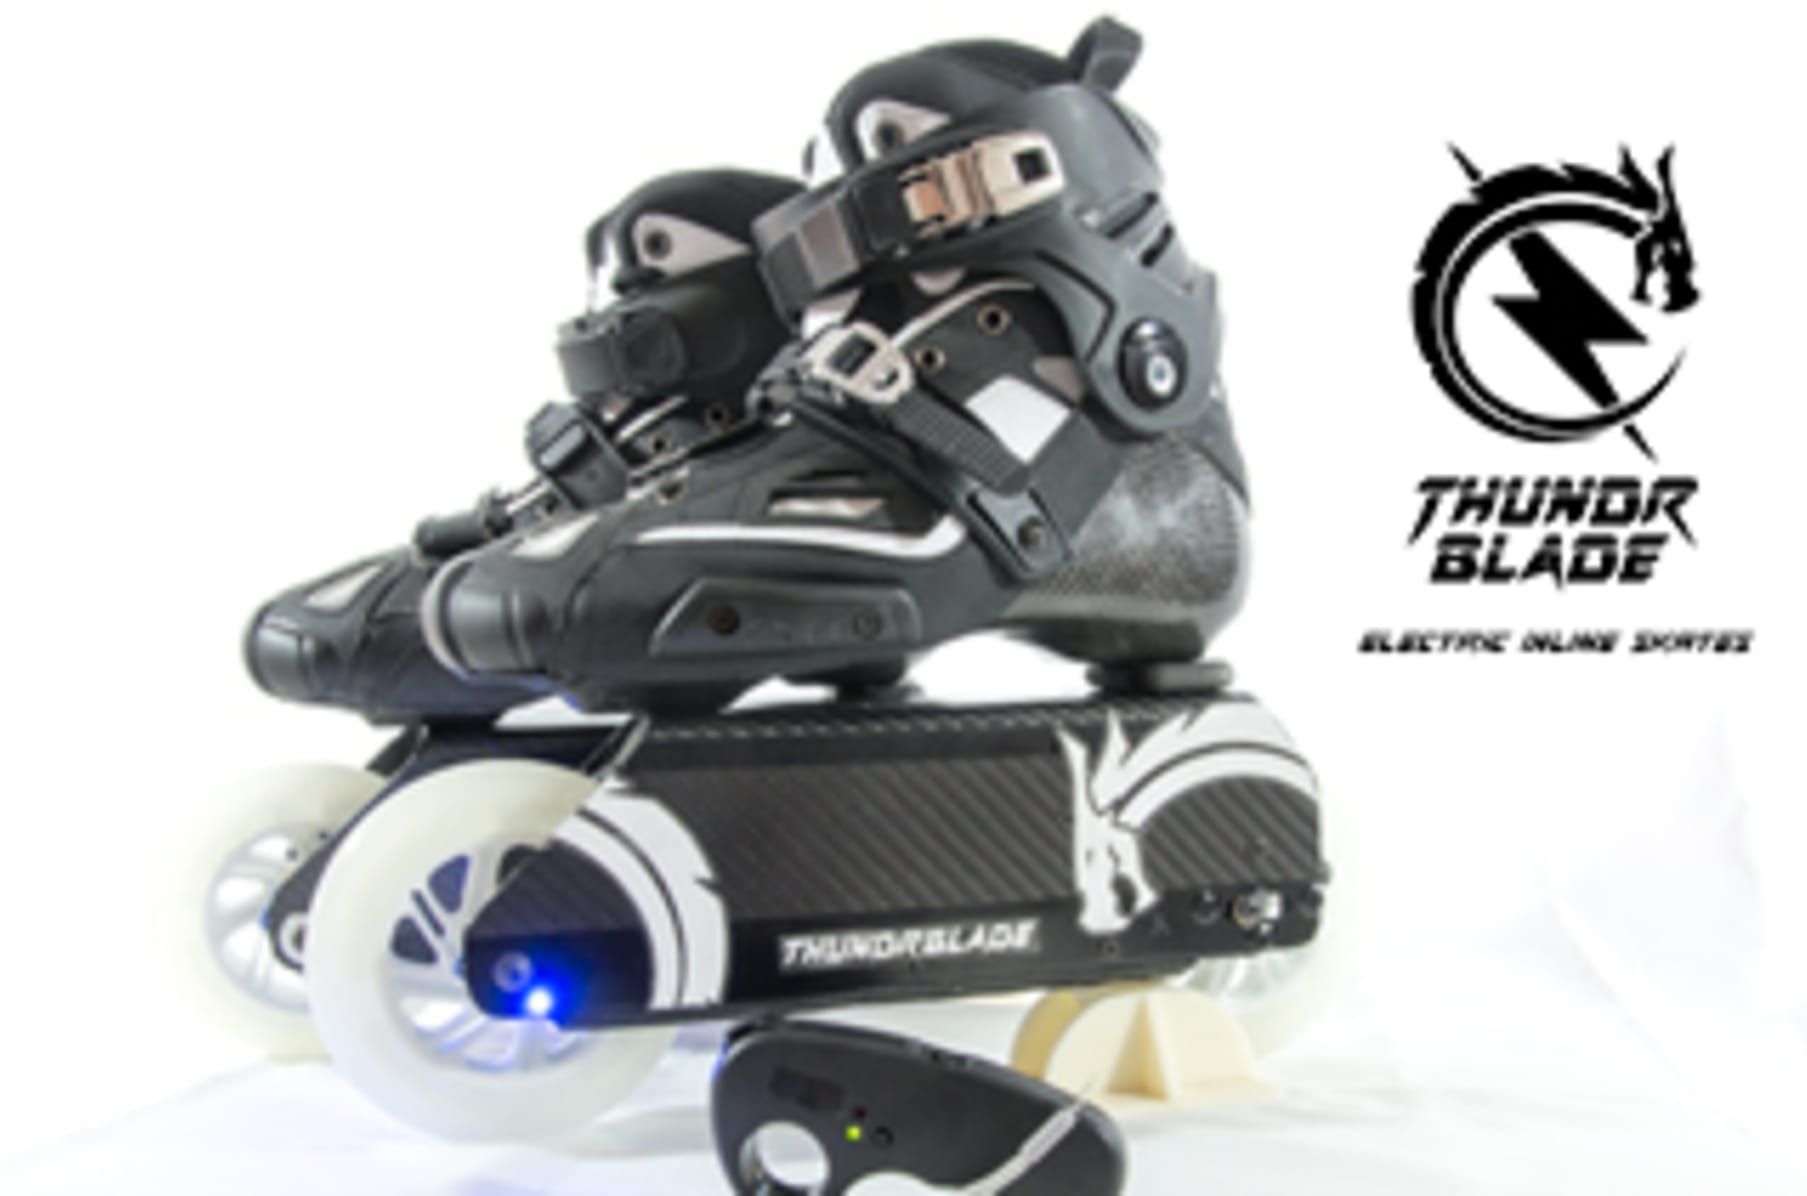 Thundrblades: Electric Skates Throttle Your Feet 25 MPH